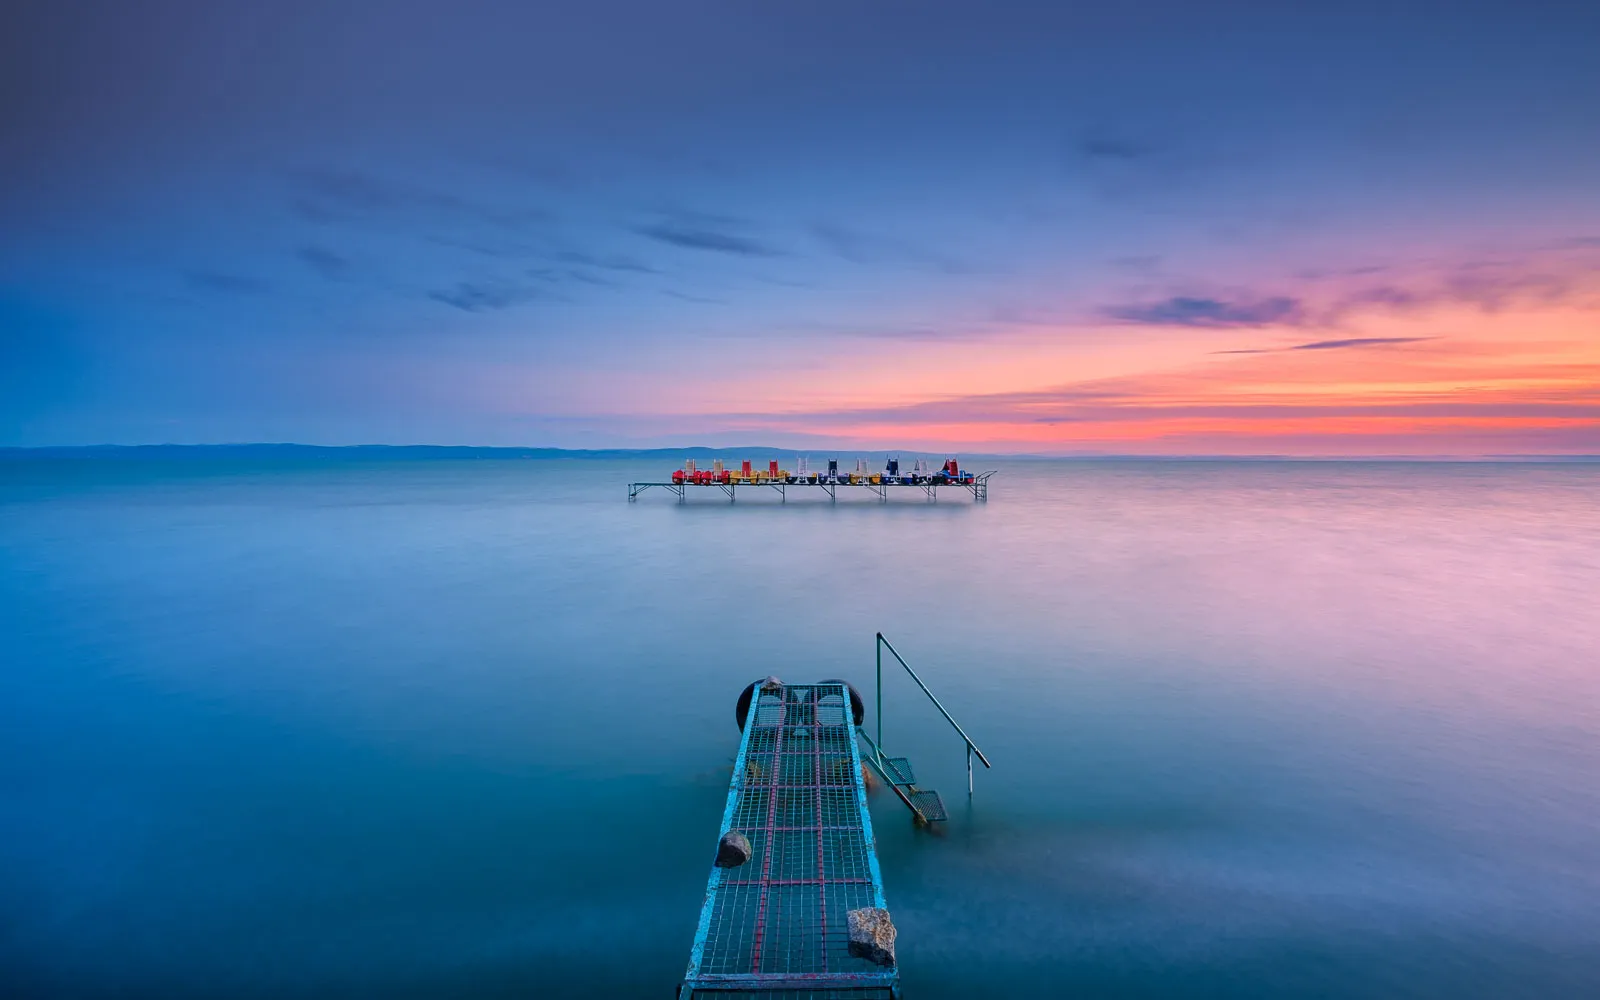 A long exposure photo taken just before sunrise of this iconic scene from Lake Balaton